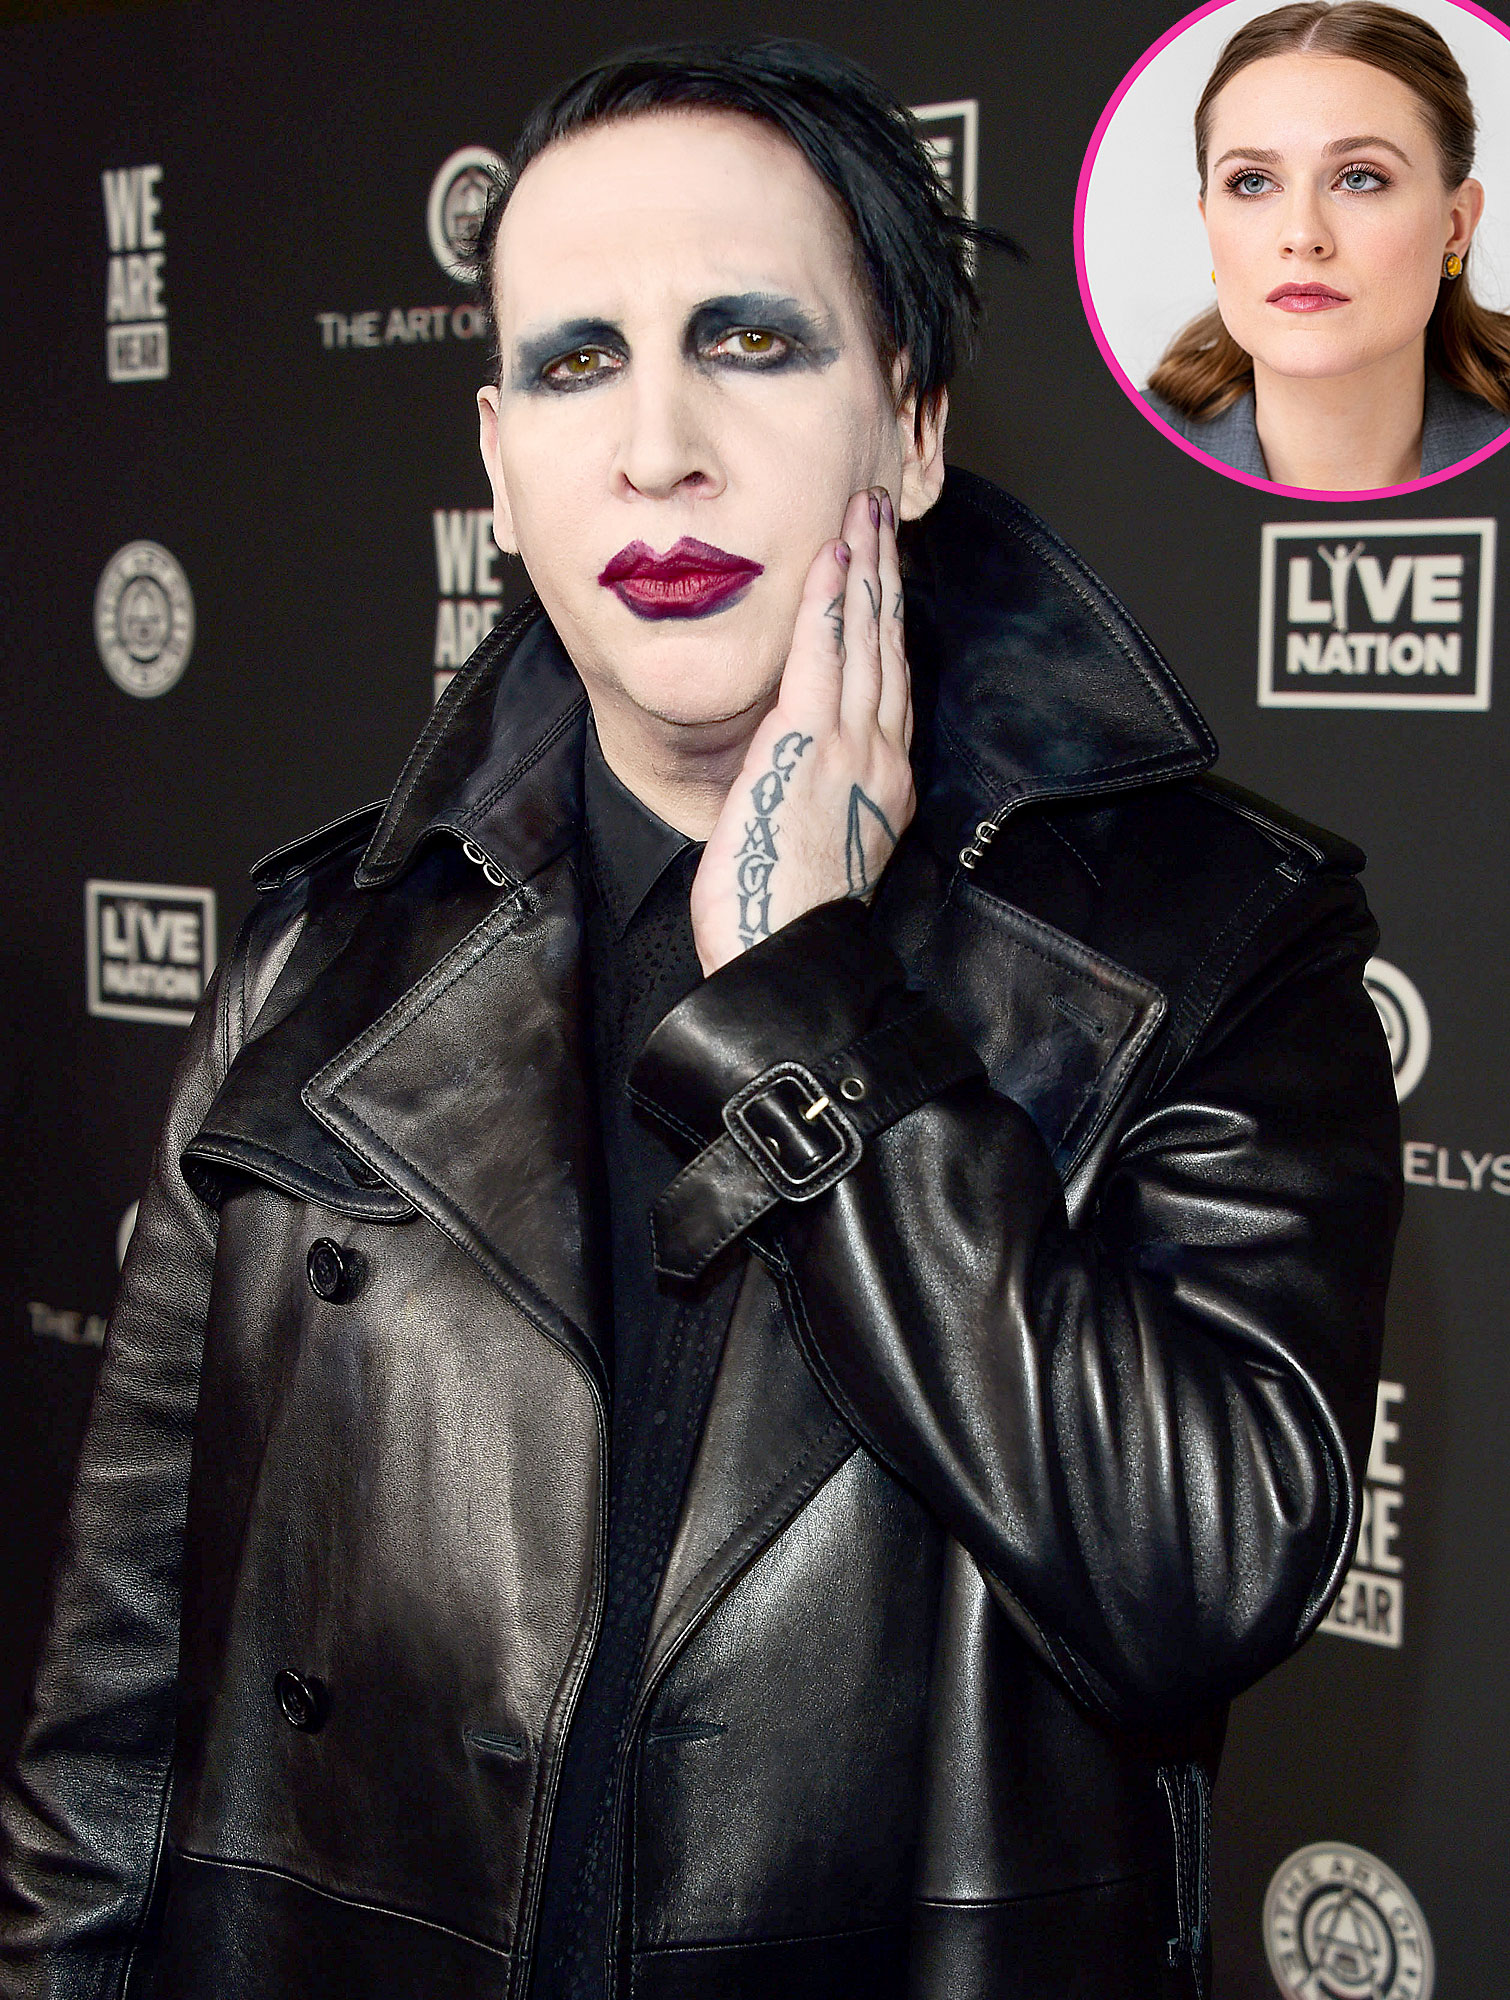 Marilyn Manson News - Us Weekly